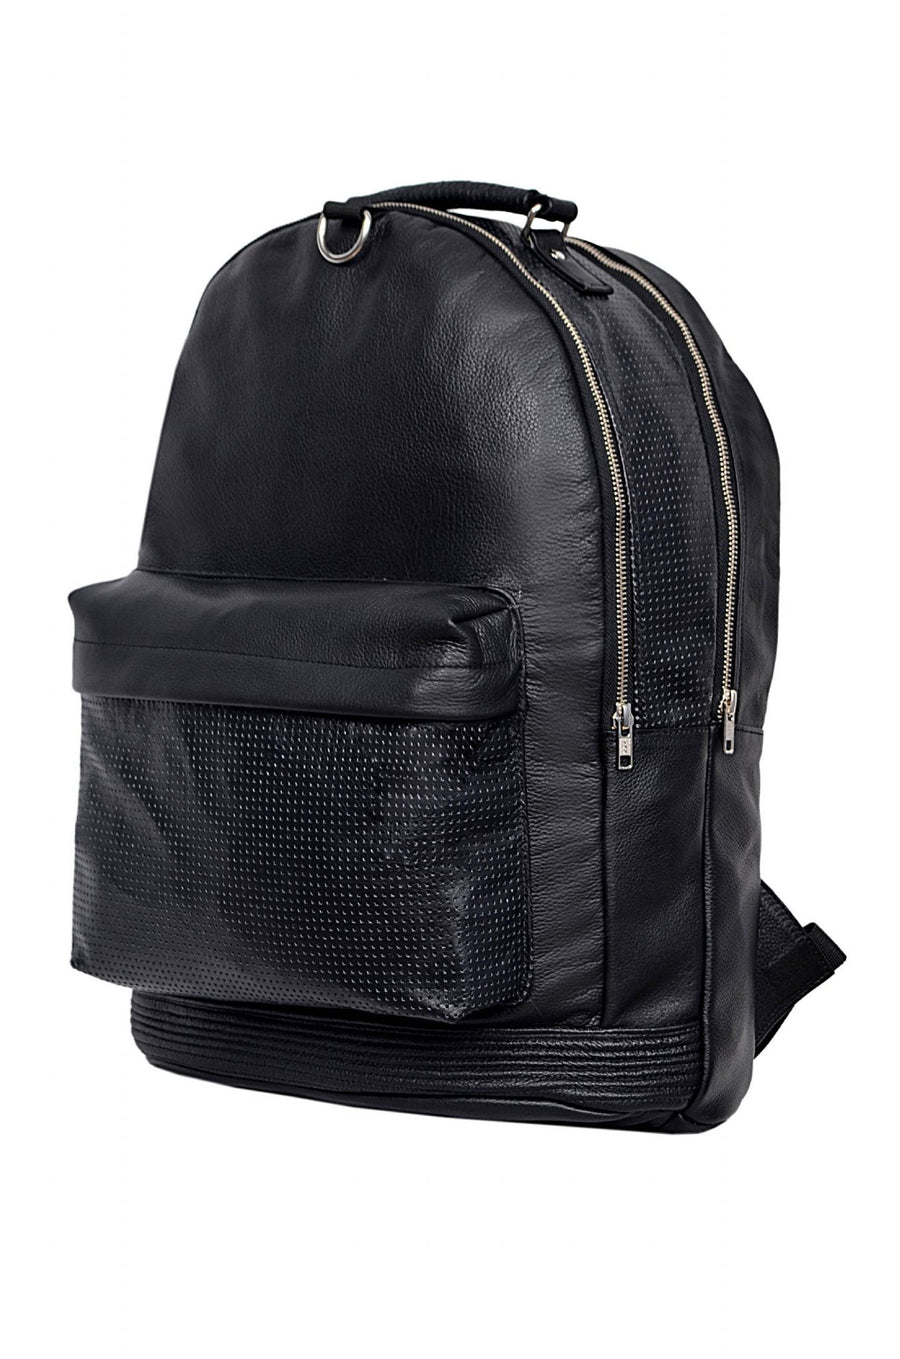 large backpack black stylish duffle travel gym real genuine leather bag 5B3 5D 4247